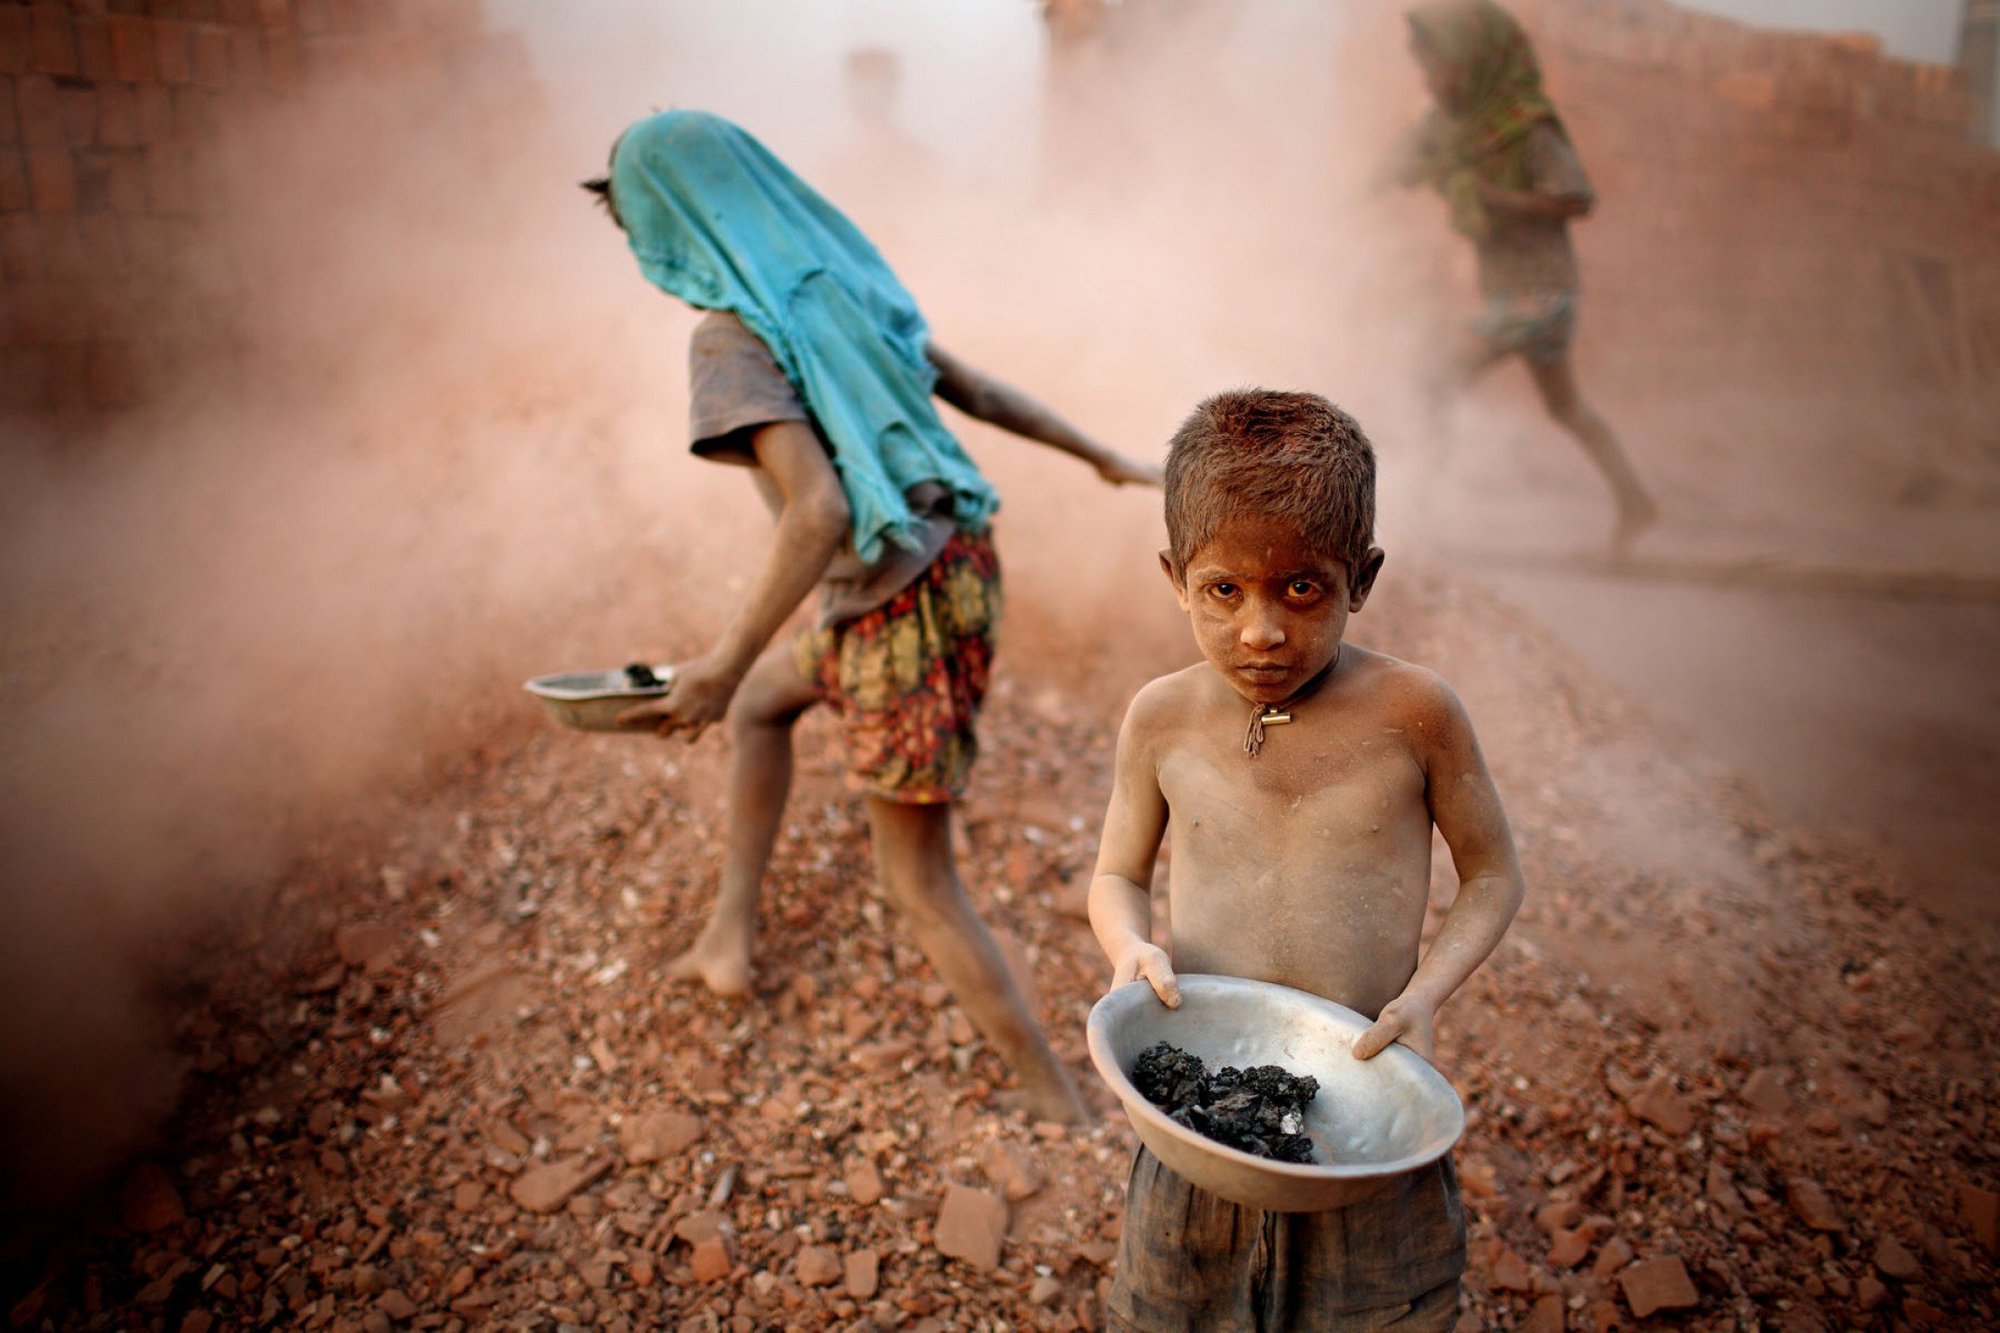 child-labour-in-bangladesh-1559670540